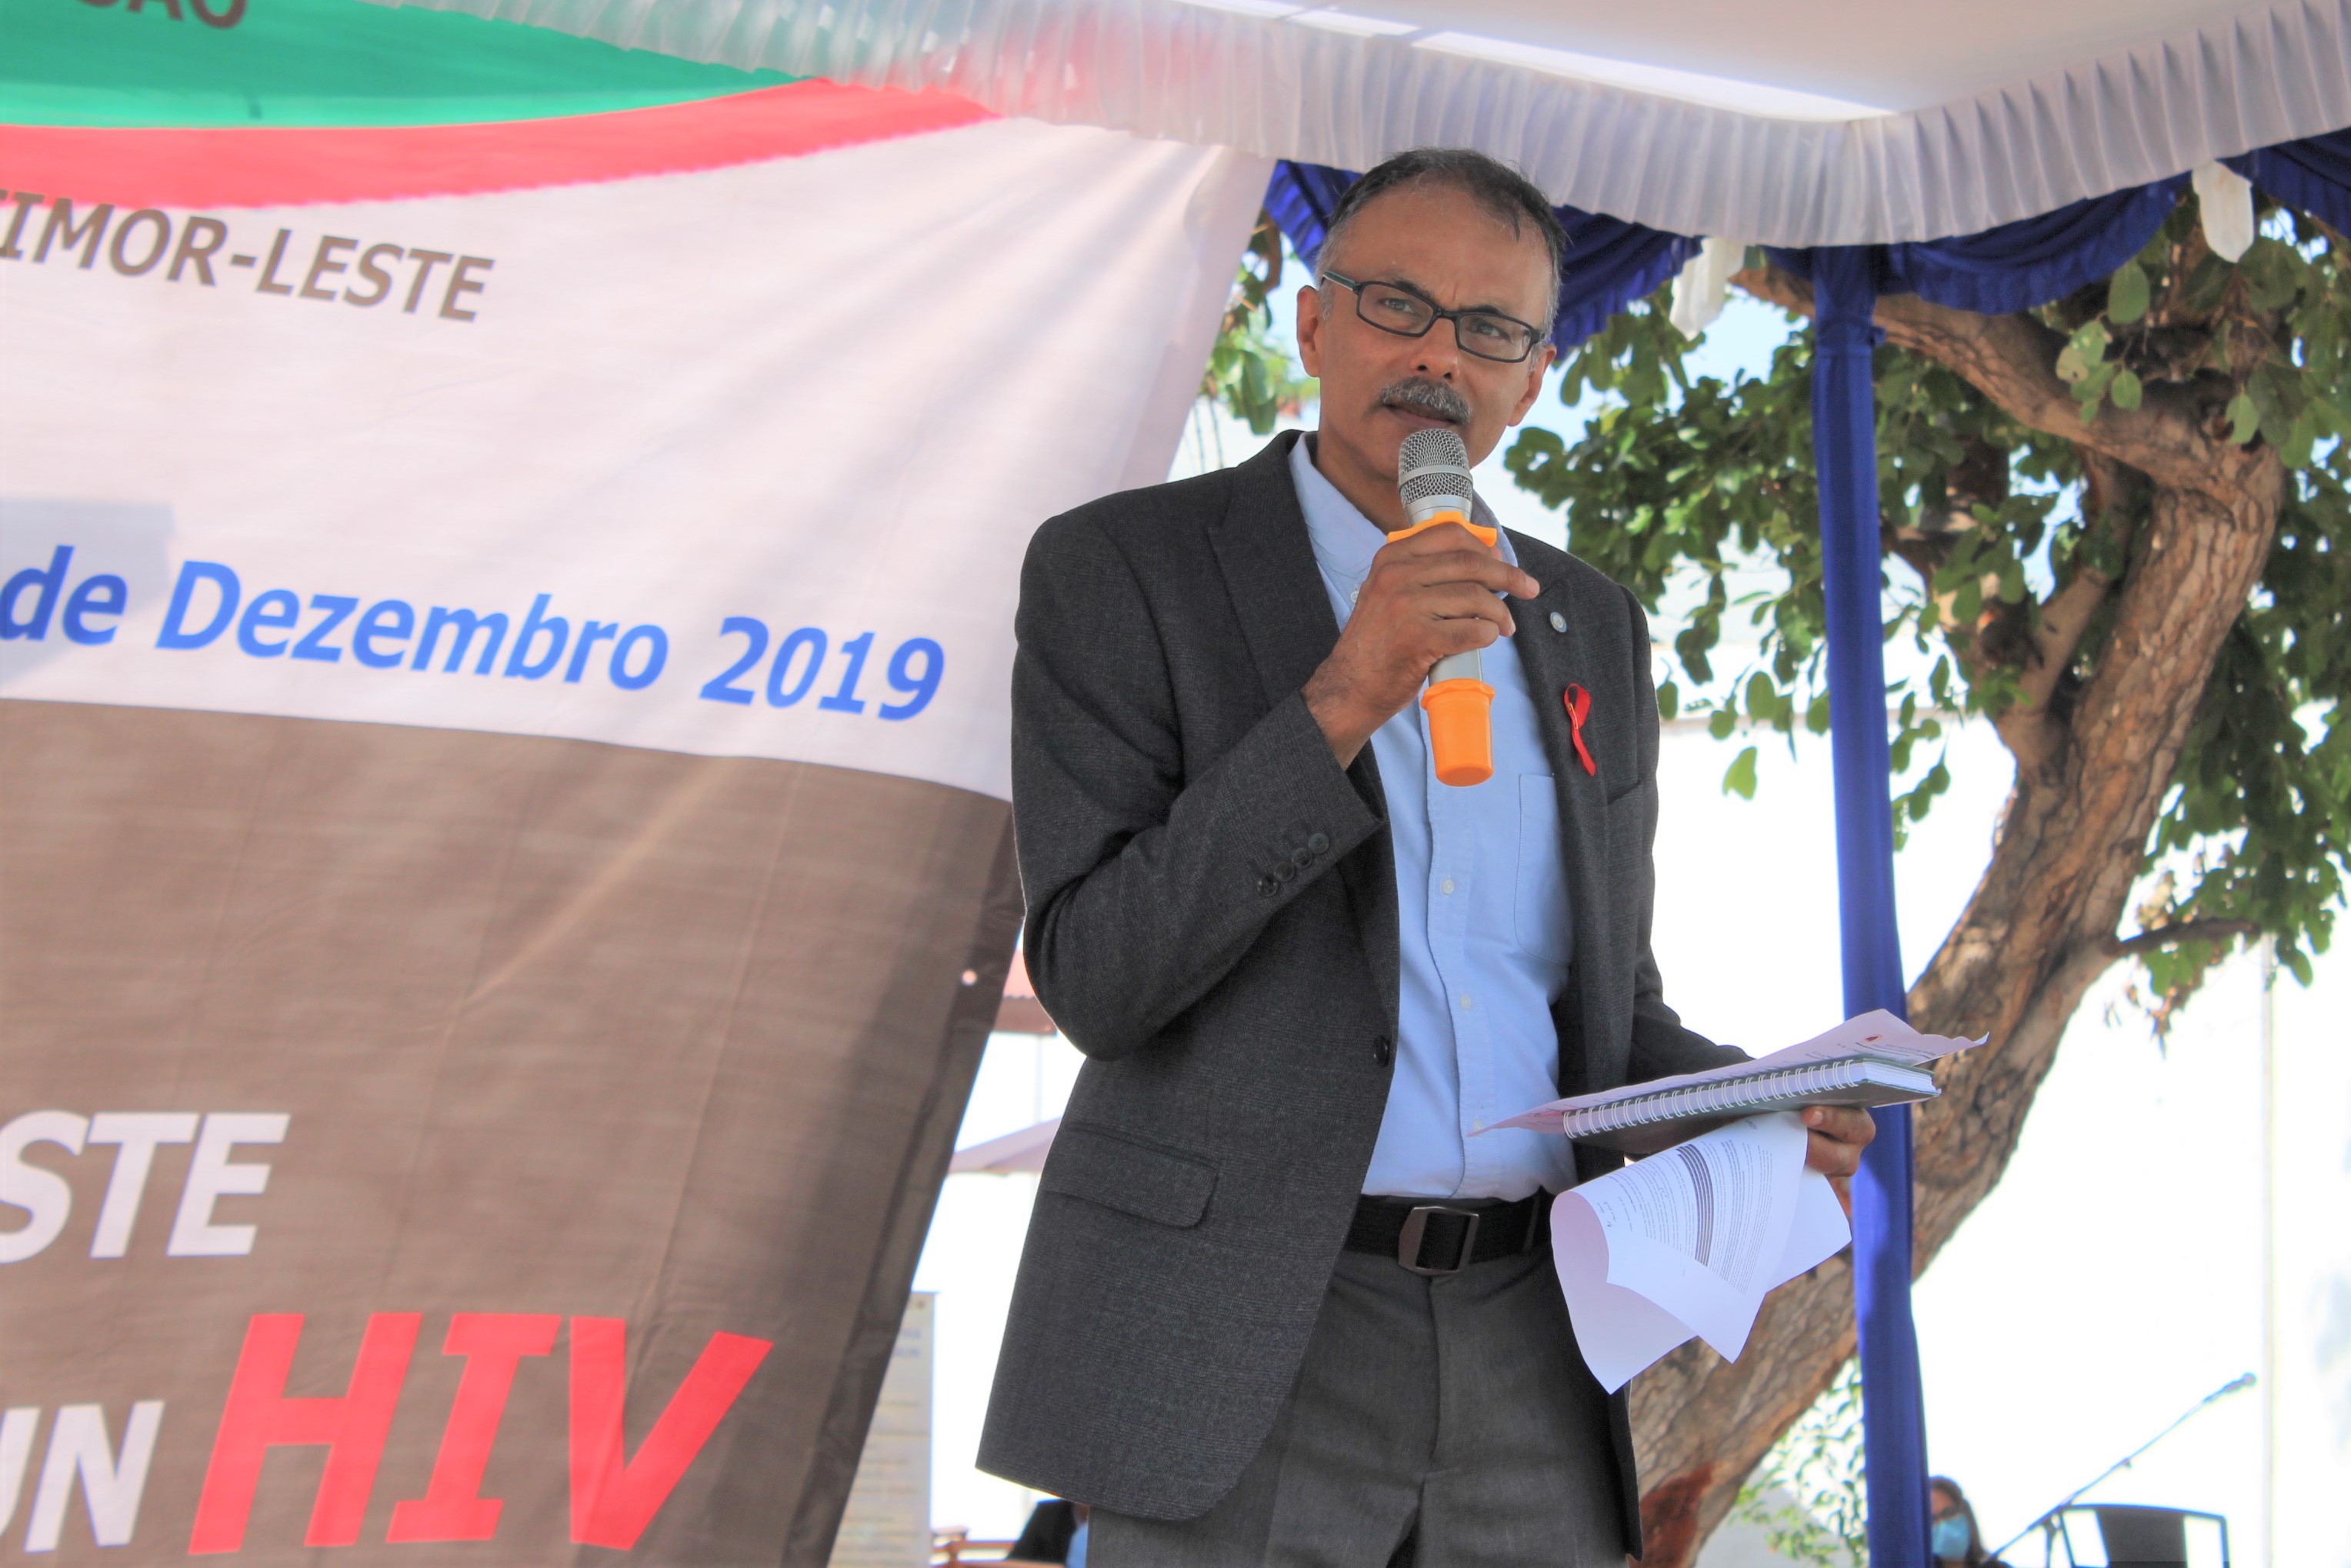 UN Resident Coordinator's speech on World AIDS Day in Timor-Leste